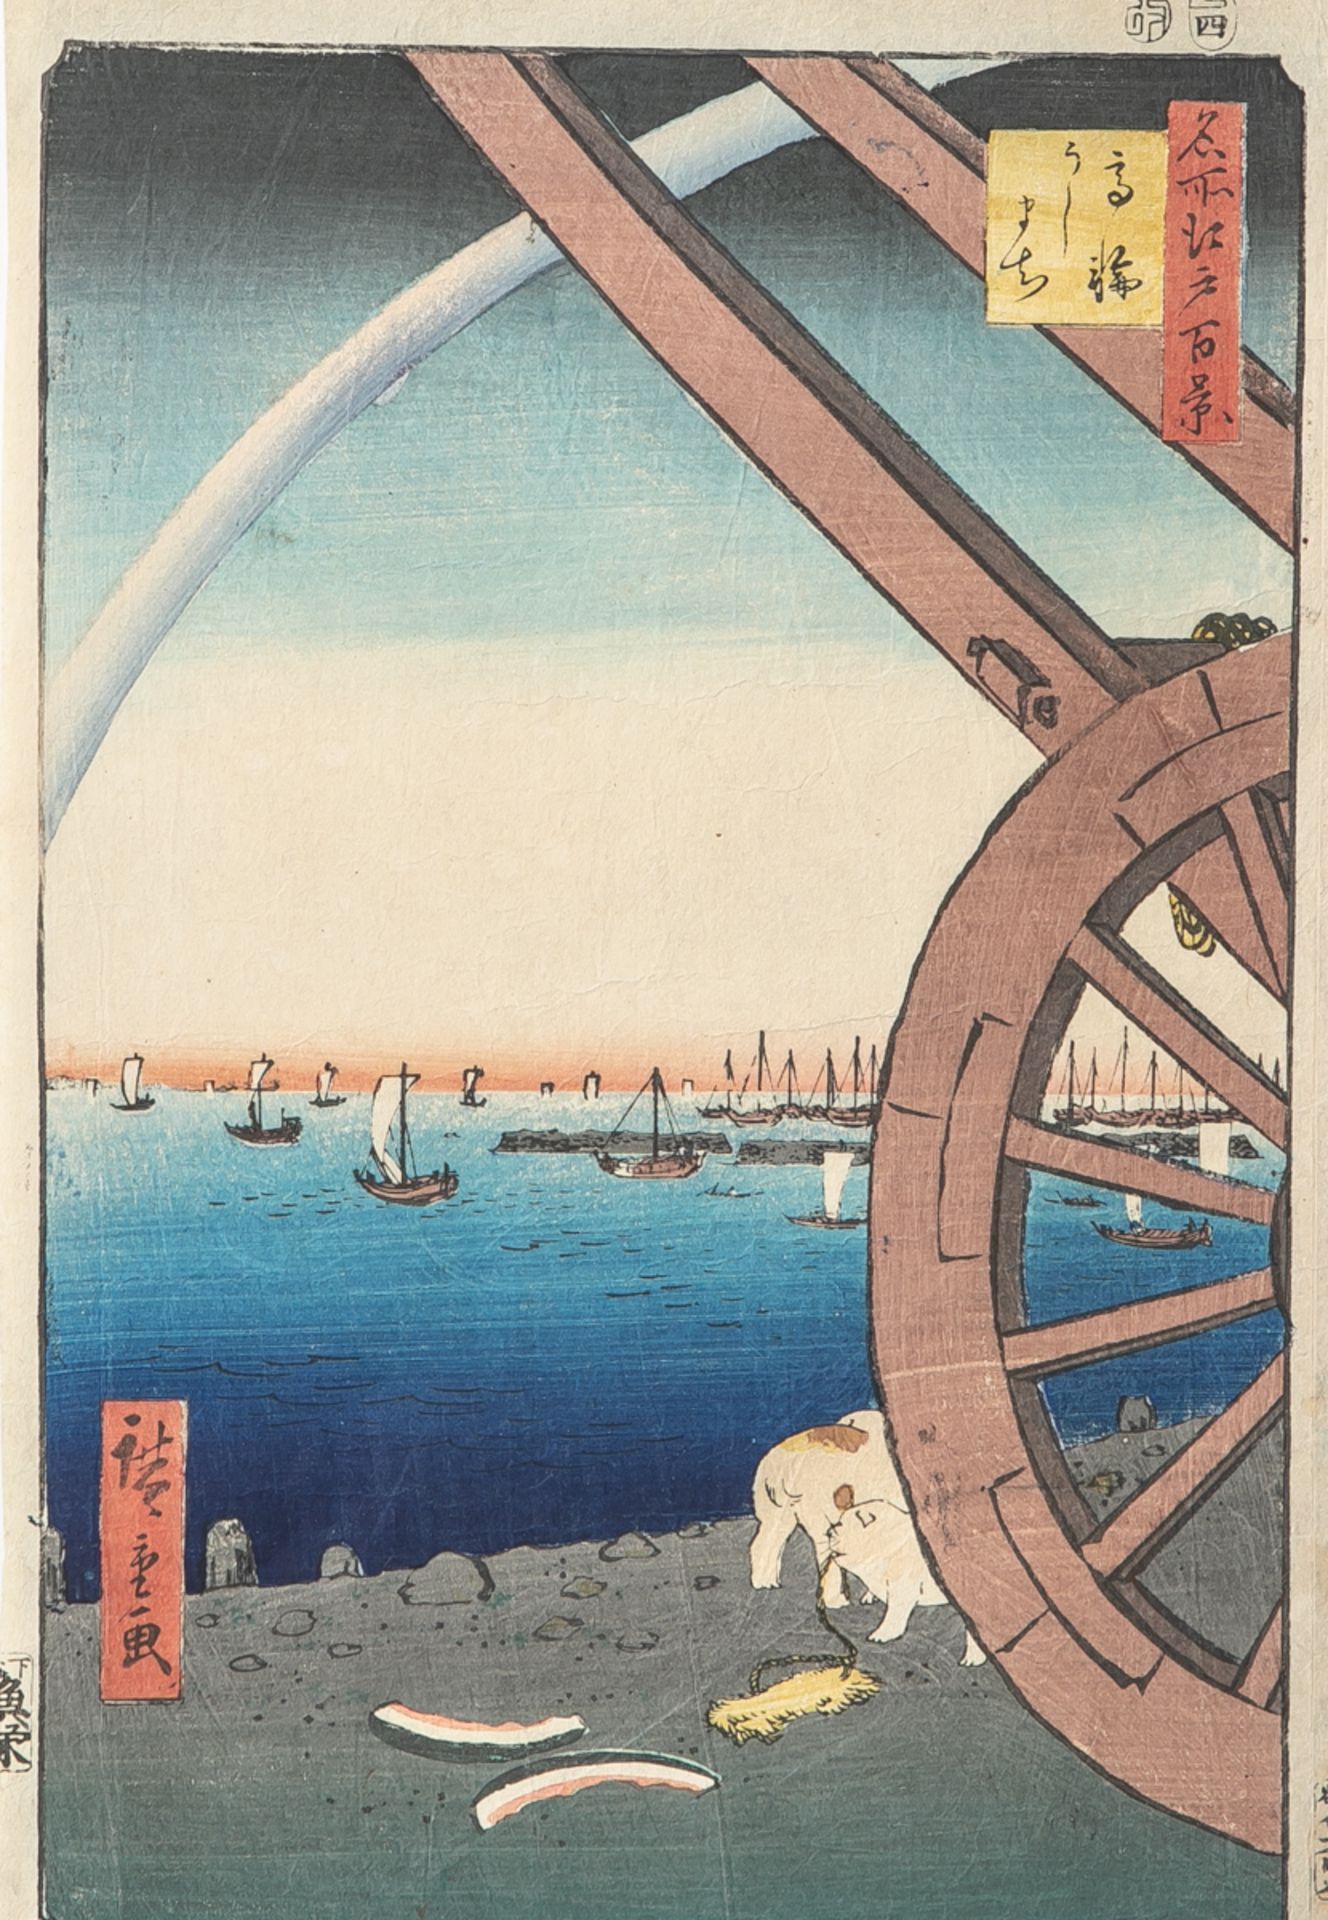 Hiroshige, Utagawa (1797 - 1858, Japan), farbiger Holzschnitt (1822), sign., ca. 36,5 x 25cm.